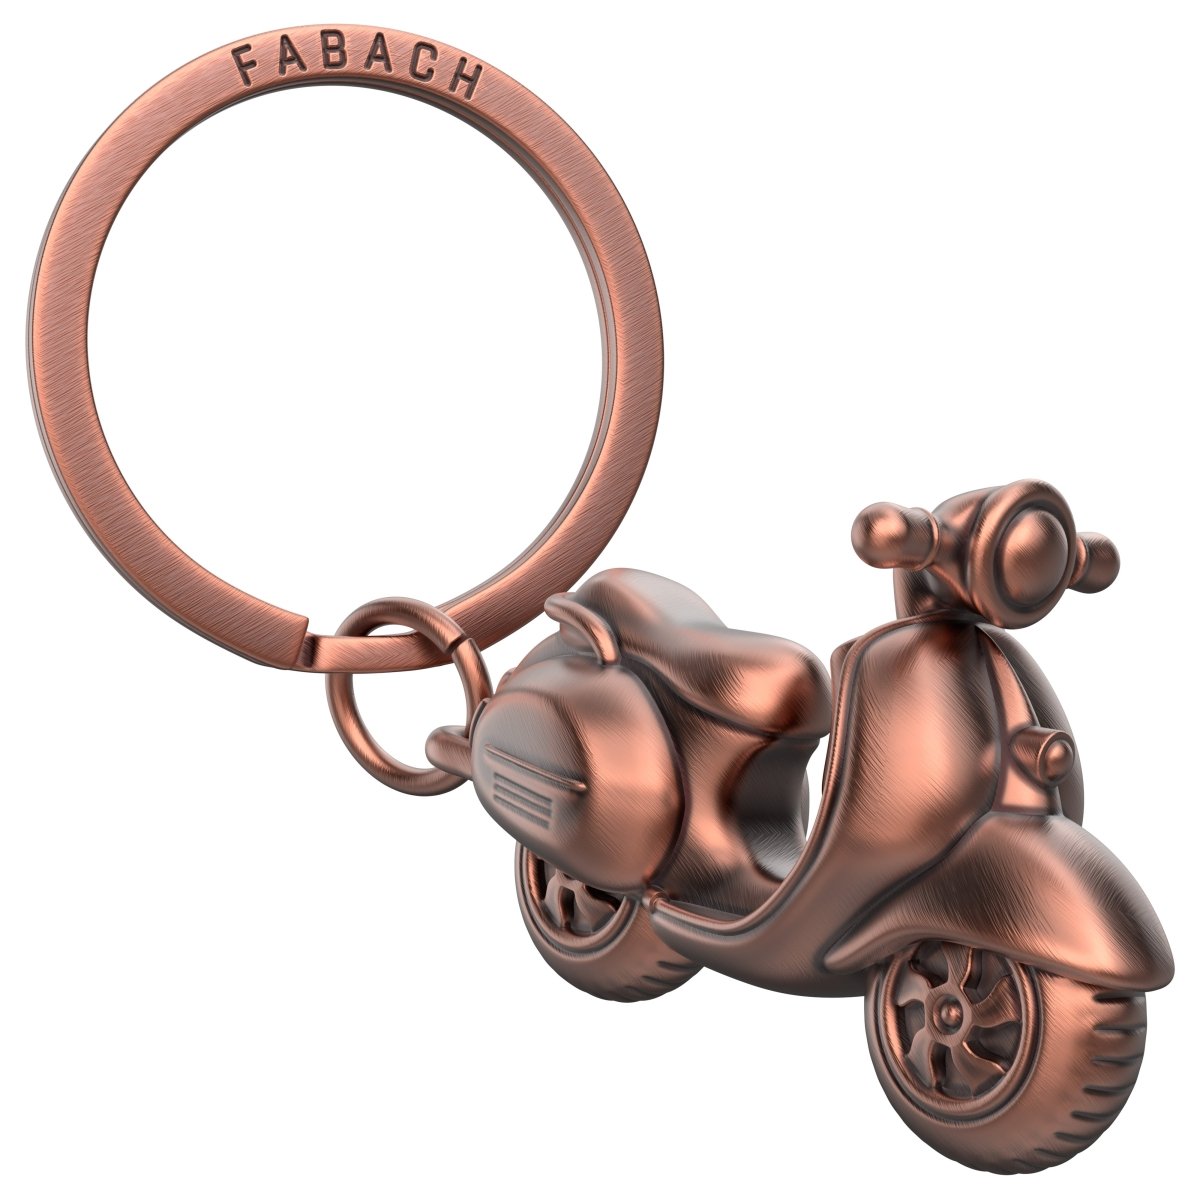 "Vespa" Schlüsselanhänger - Geschenk Roller Schlüsselanhänger für Rollerfahrer und Vespa Fans - FABACH#farbe_antique roségold